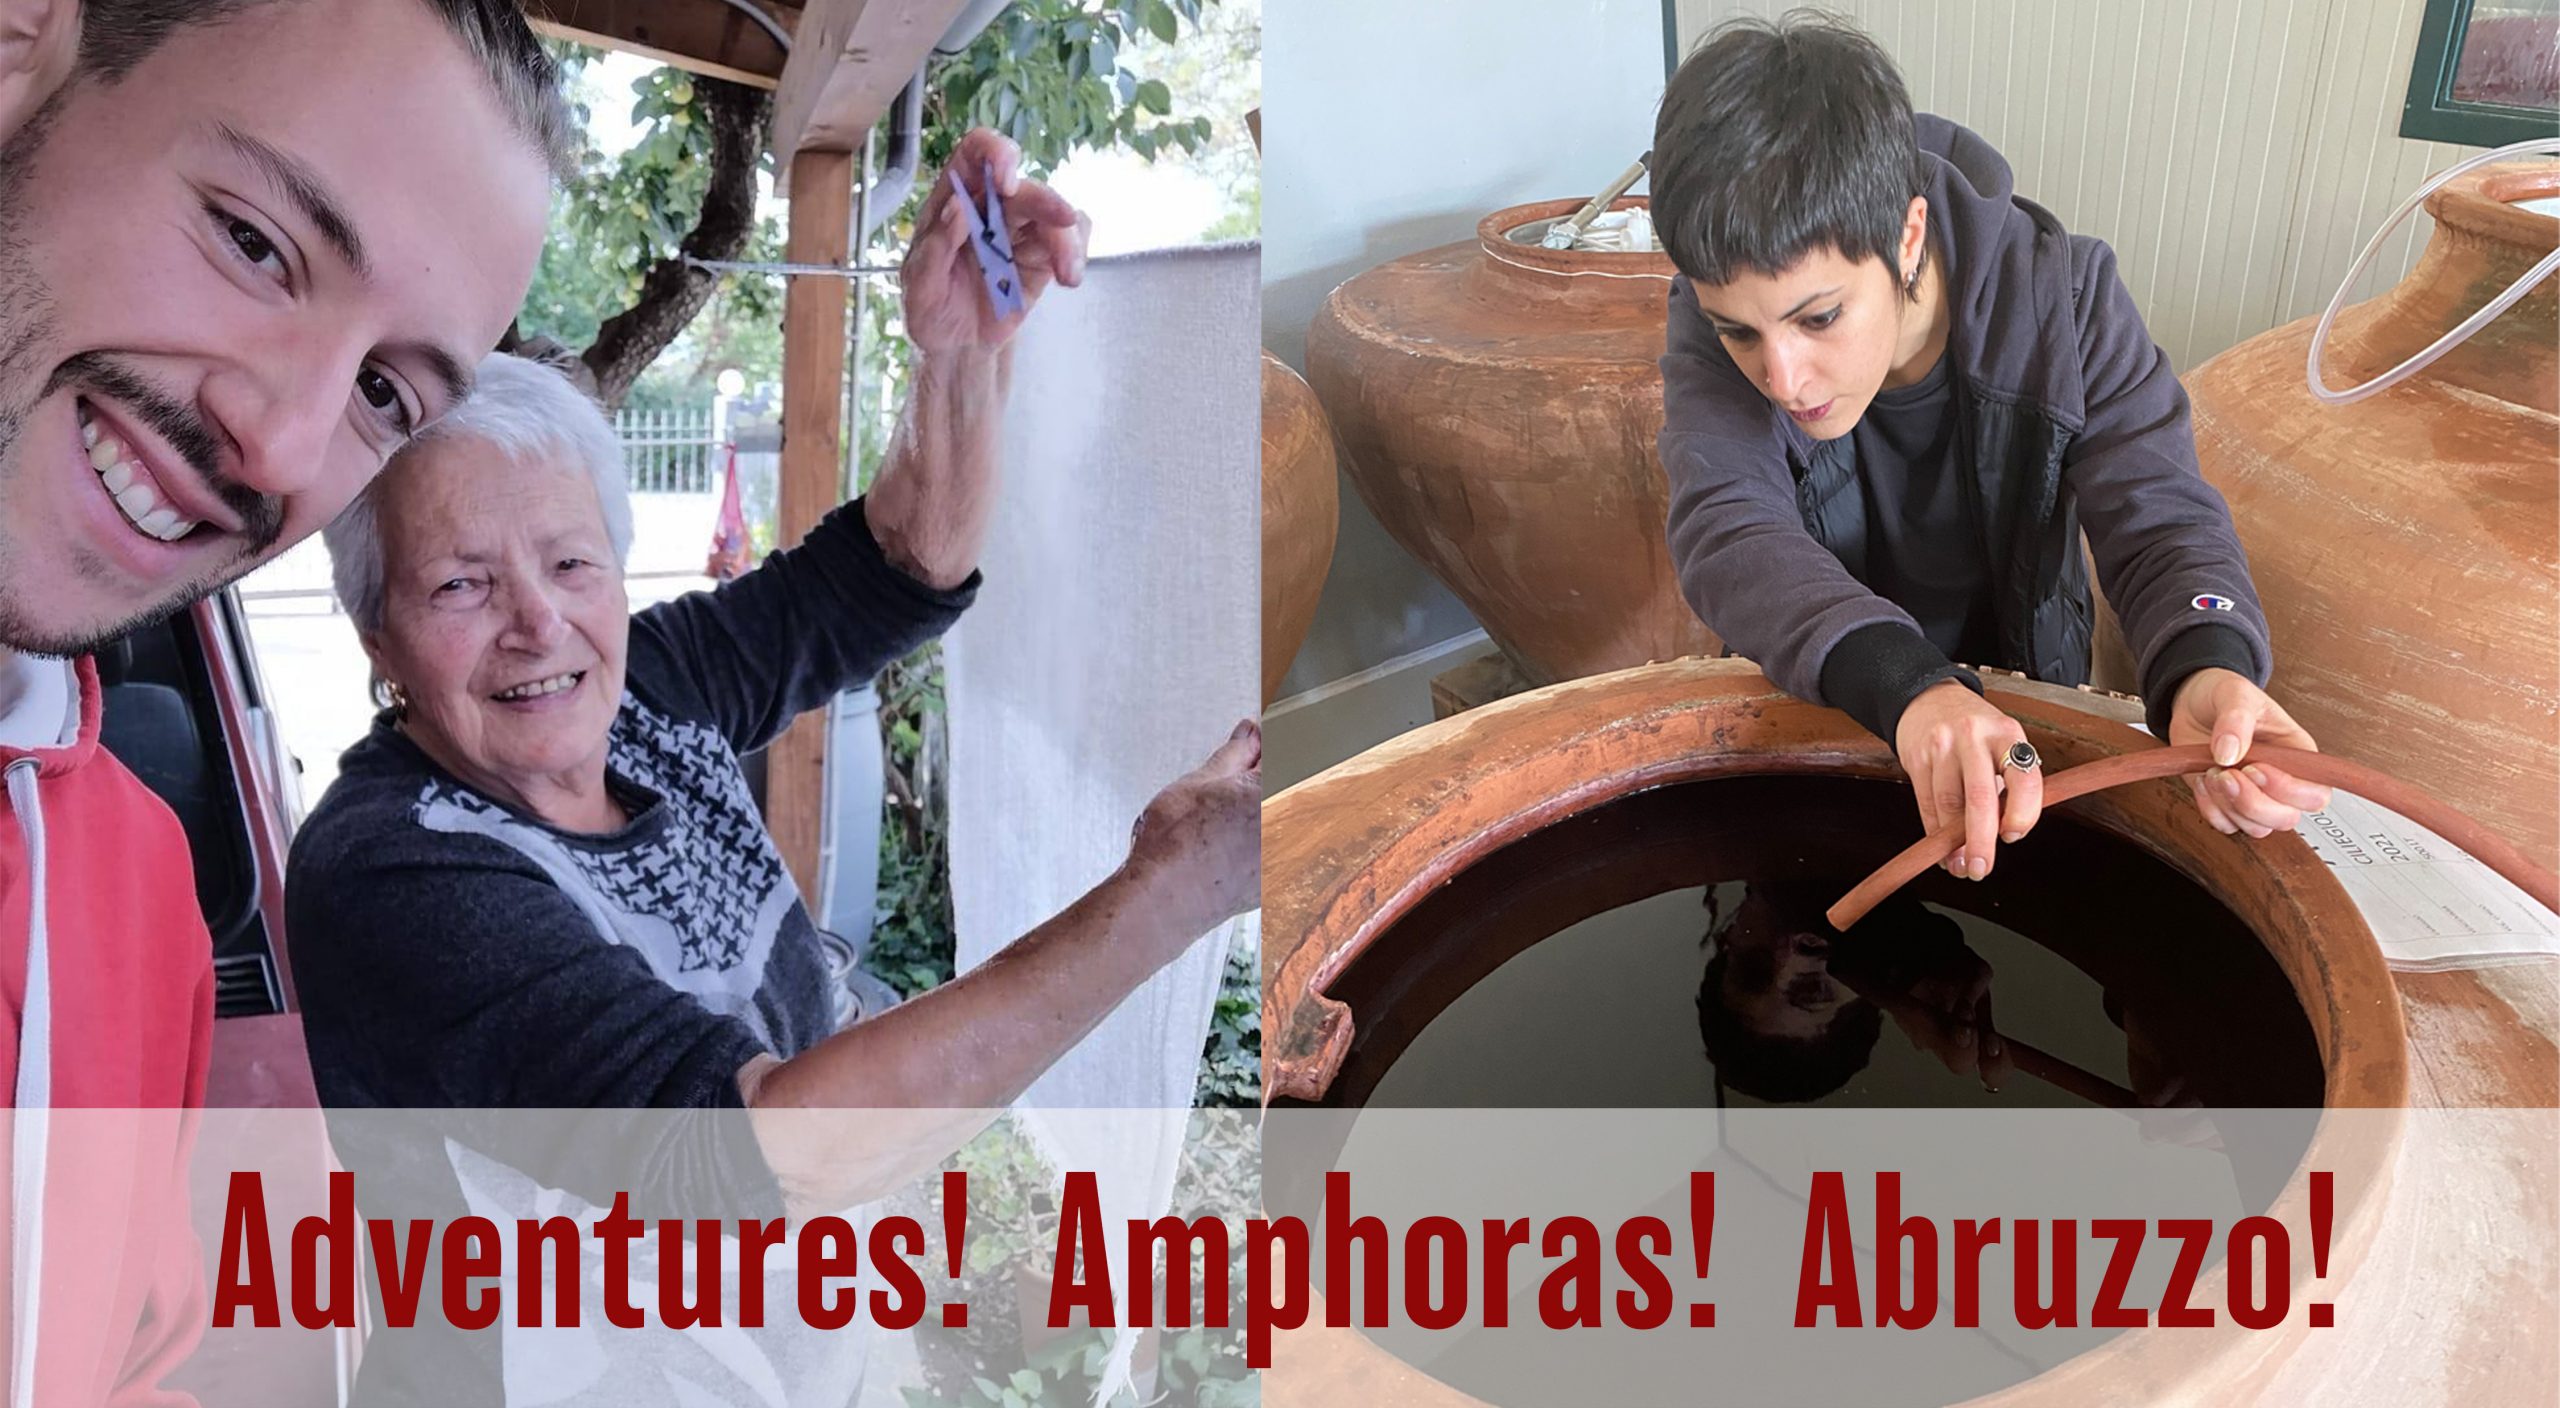 Episode #658 - Adventures!  Amphoras!  Abruzzo!